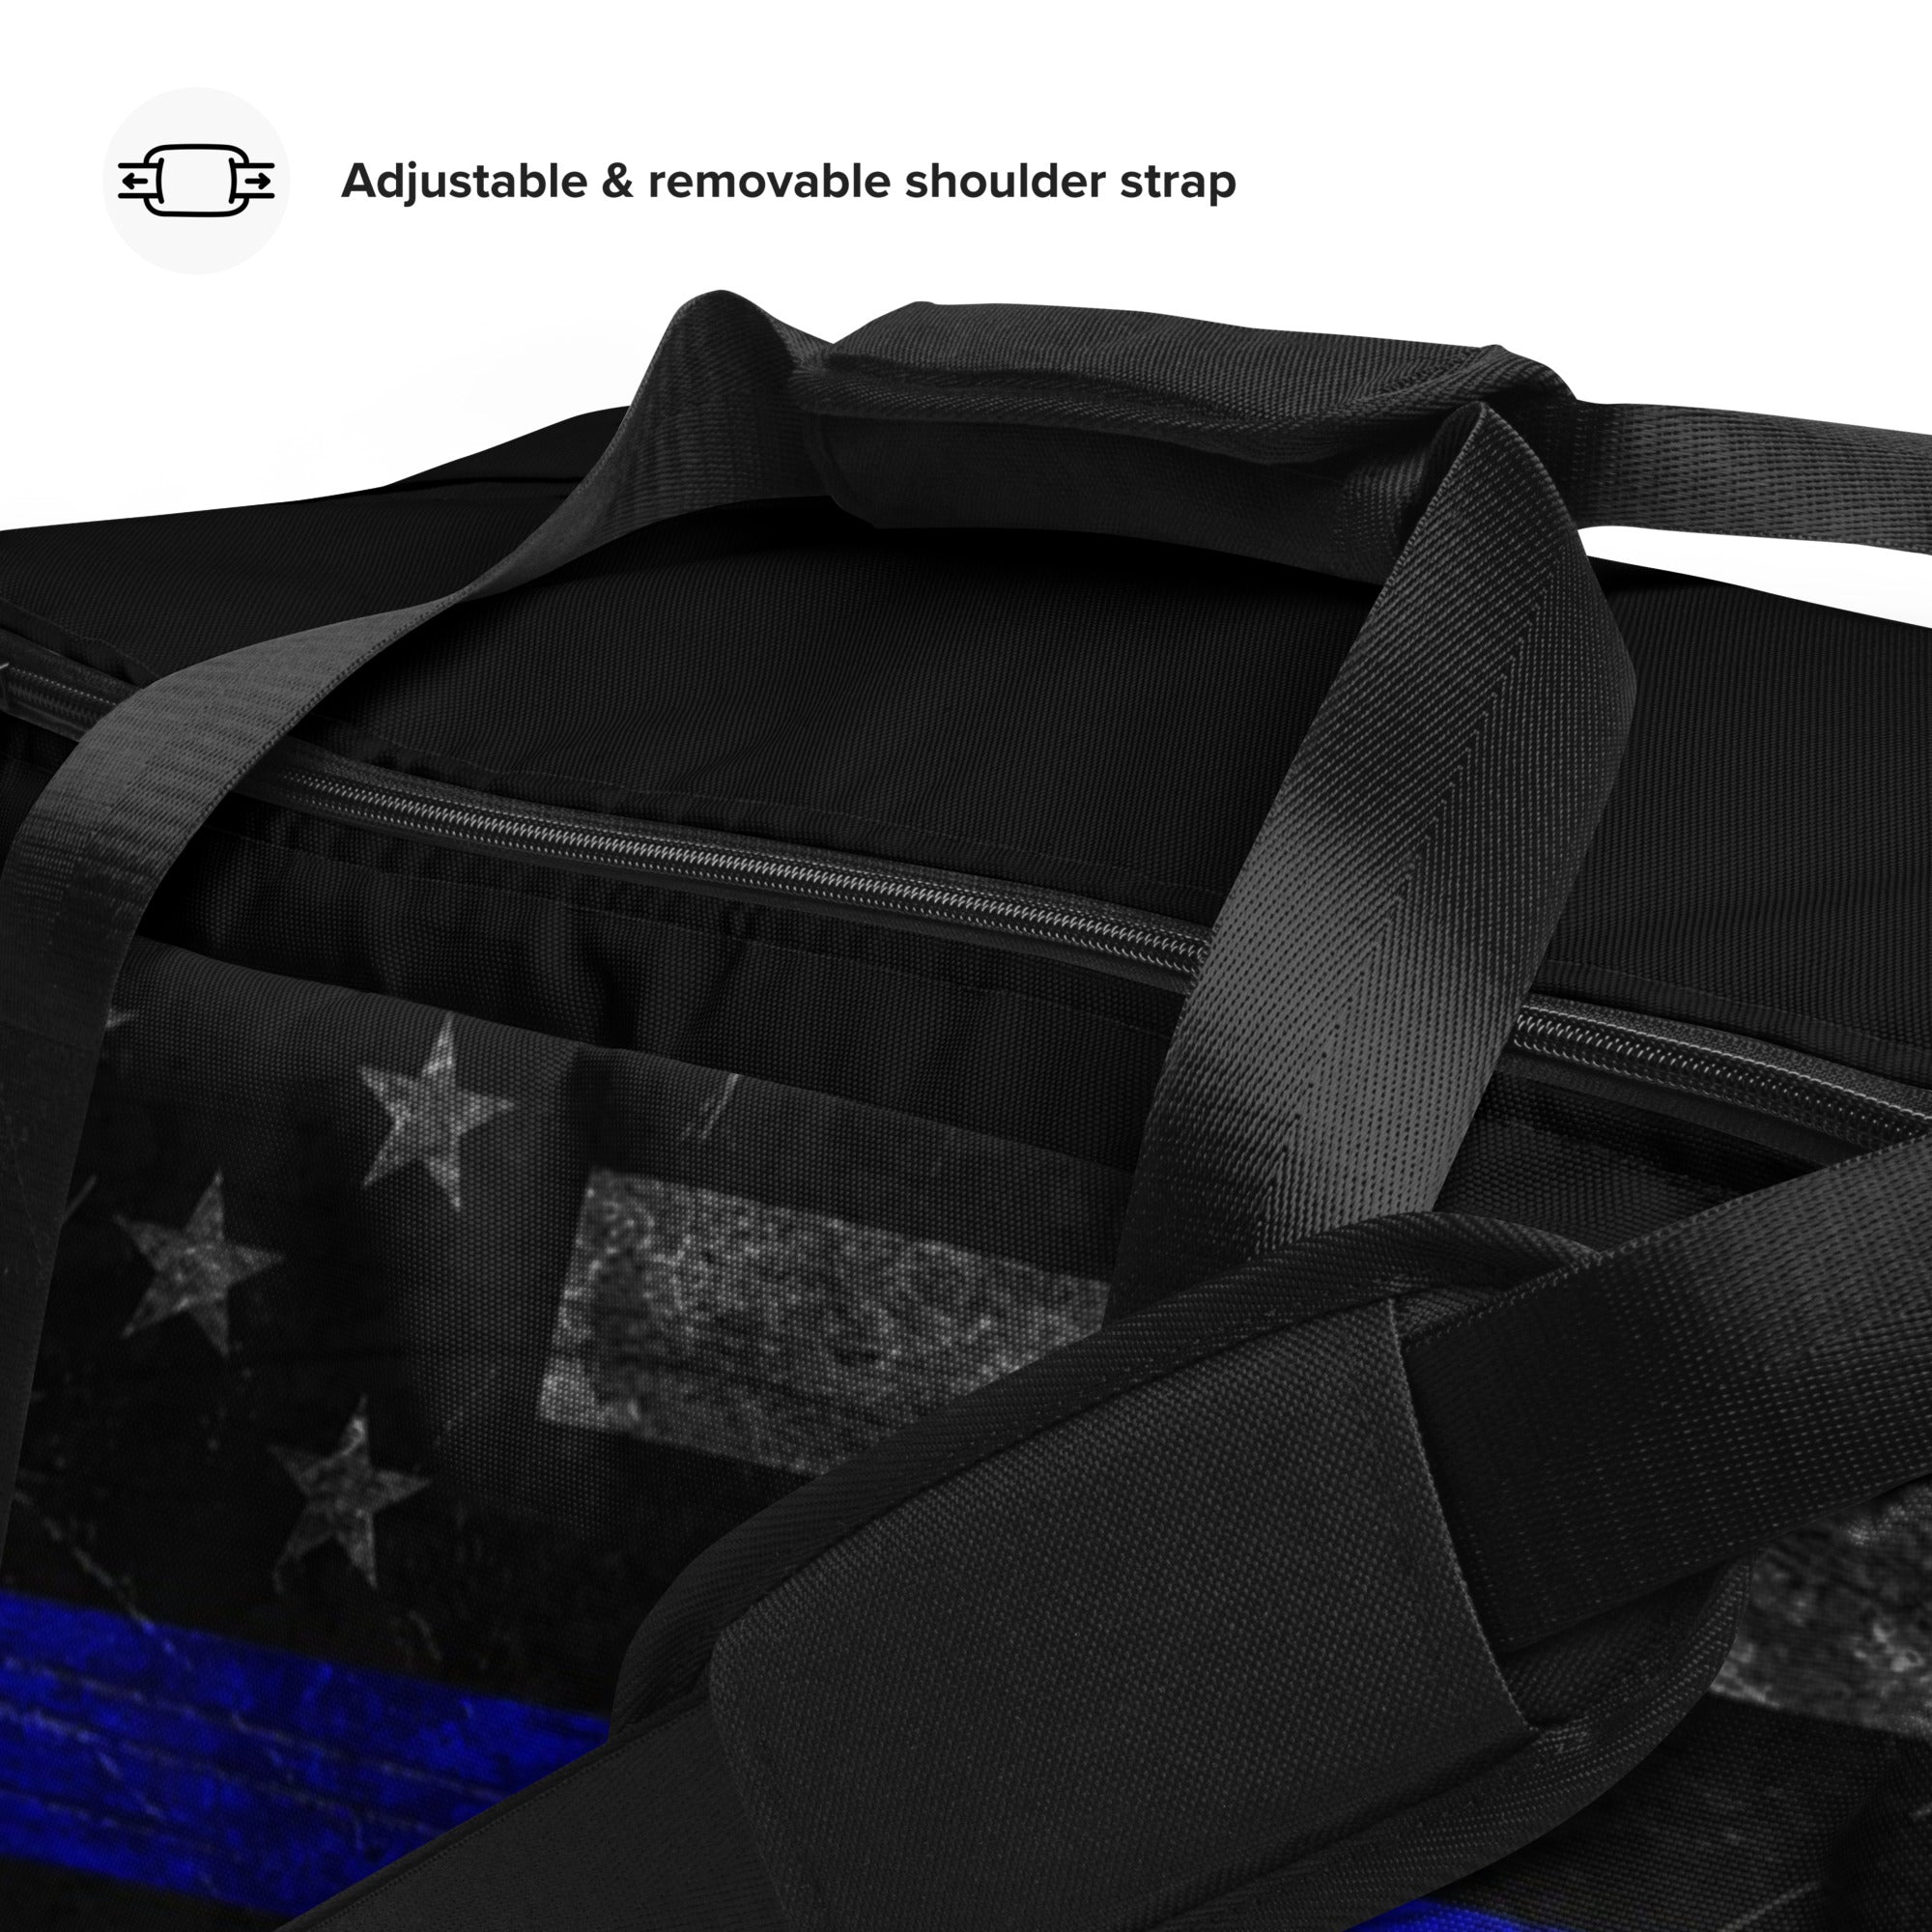 Dark Distressed Thin Blue Line Flag Duffle Bag